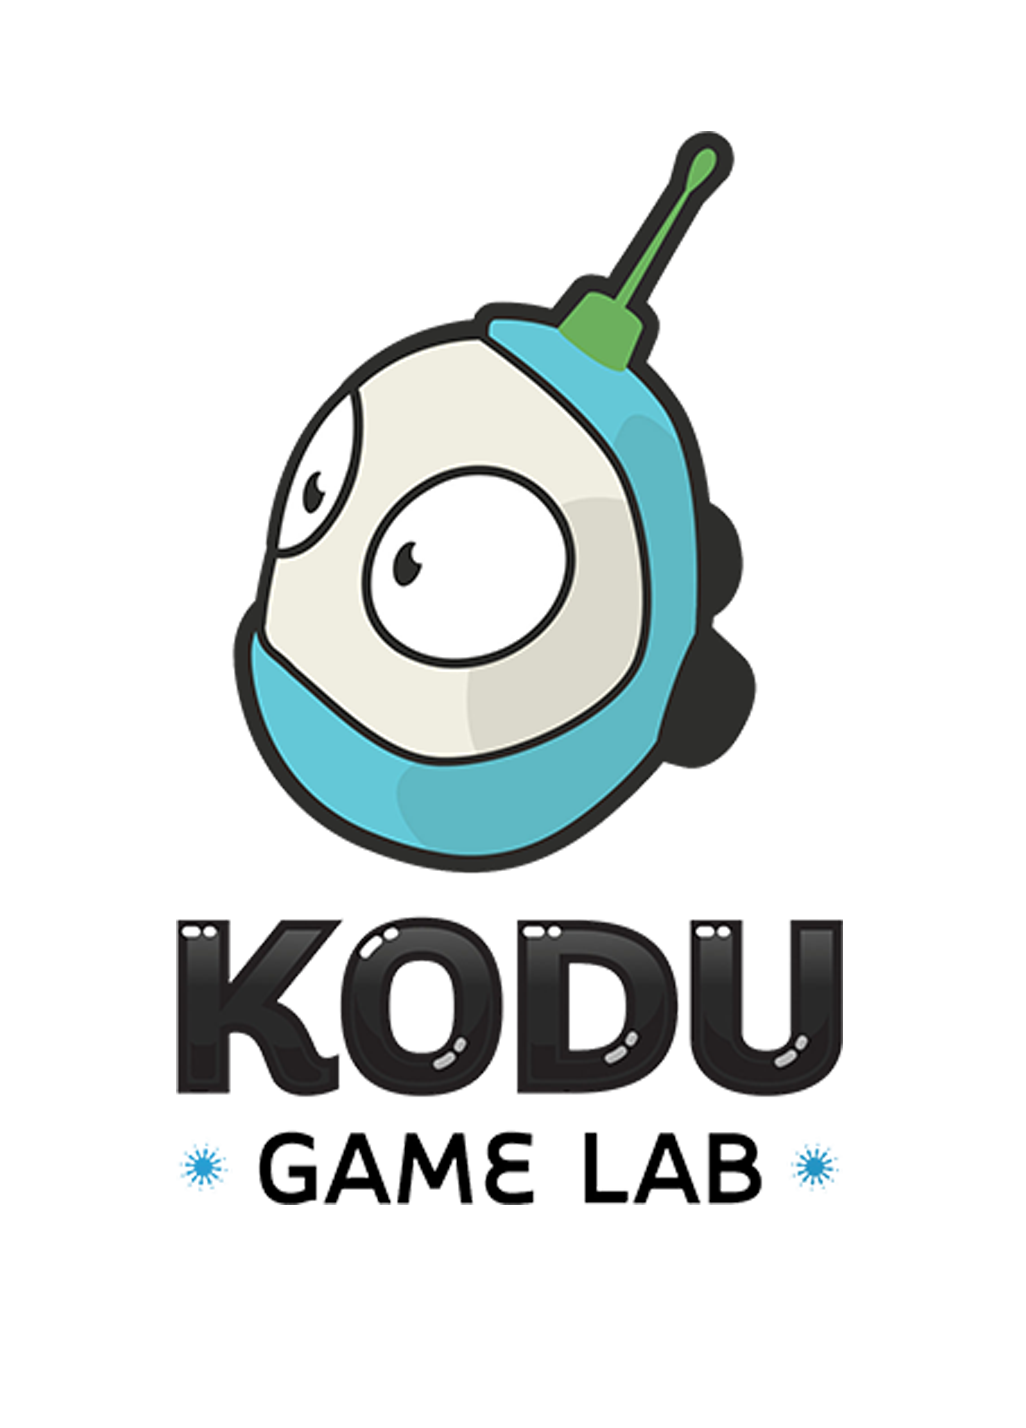 Код гейм игра. Kodu game Lab. Соду гейм Лаб. Kodu game Lab игры. Kodu логотип.